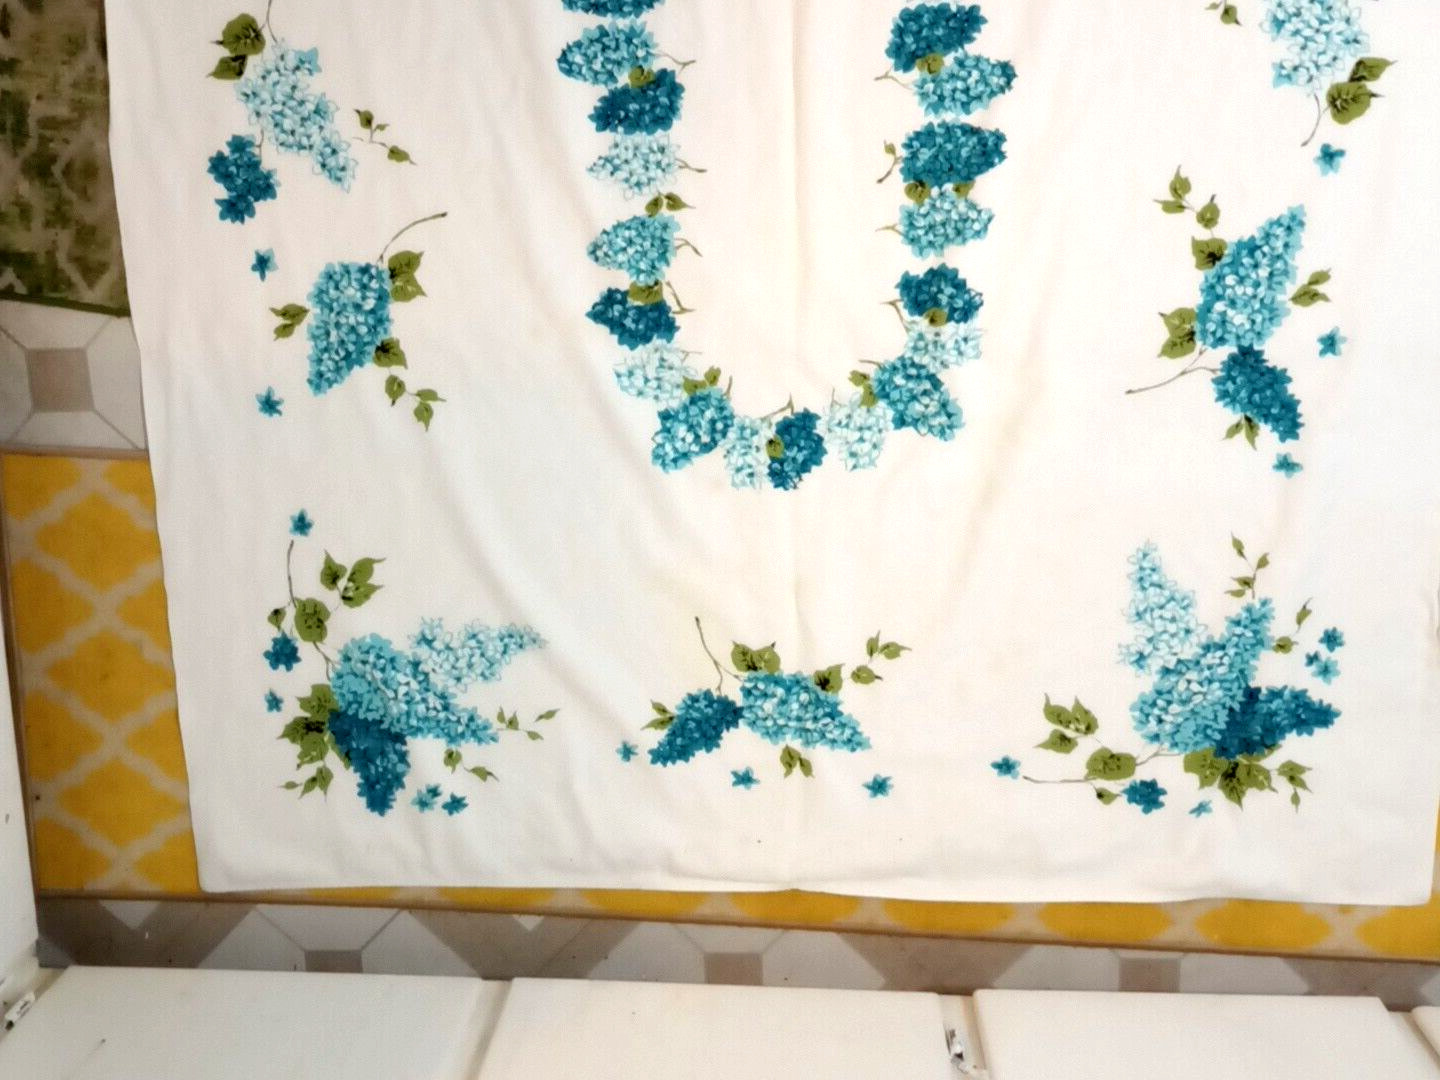 Wilendur Lilacs Tablecloth Vintage Aqua Flowers Teal Floral Leaves MCM Print